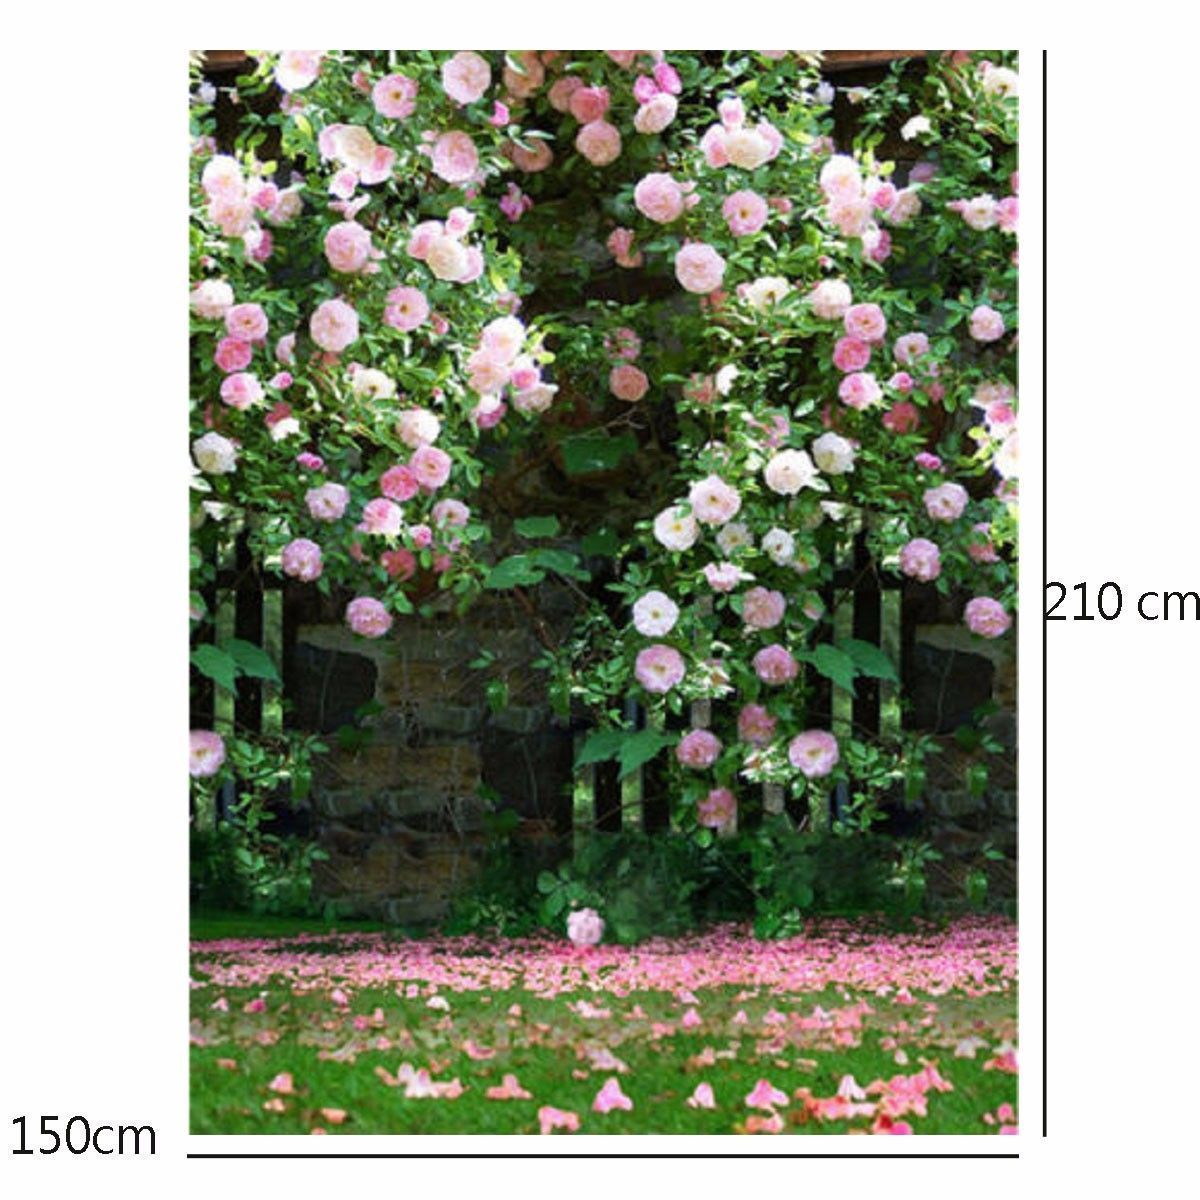 Photography-Vinyl-Background-Romantic-Wedding-Rendezvous-Garden-Roses-Cluster-1142376